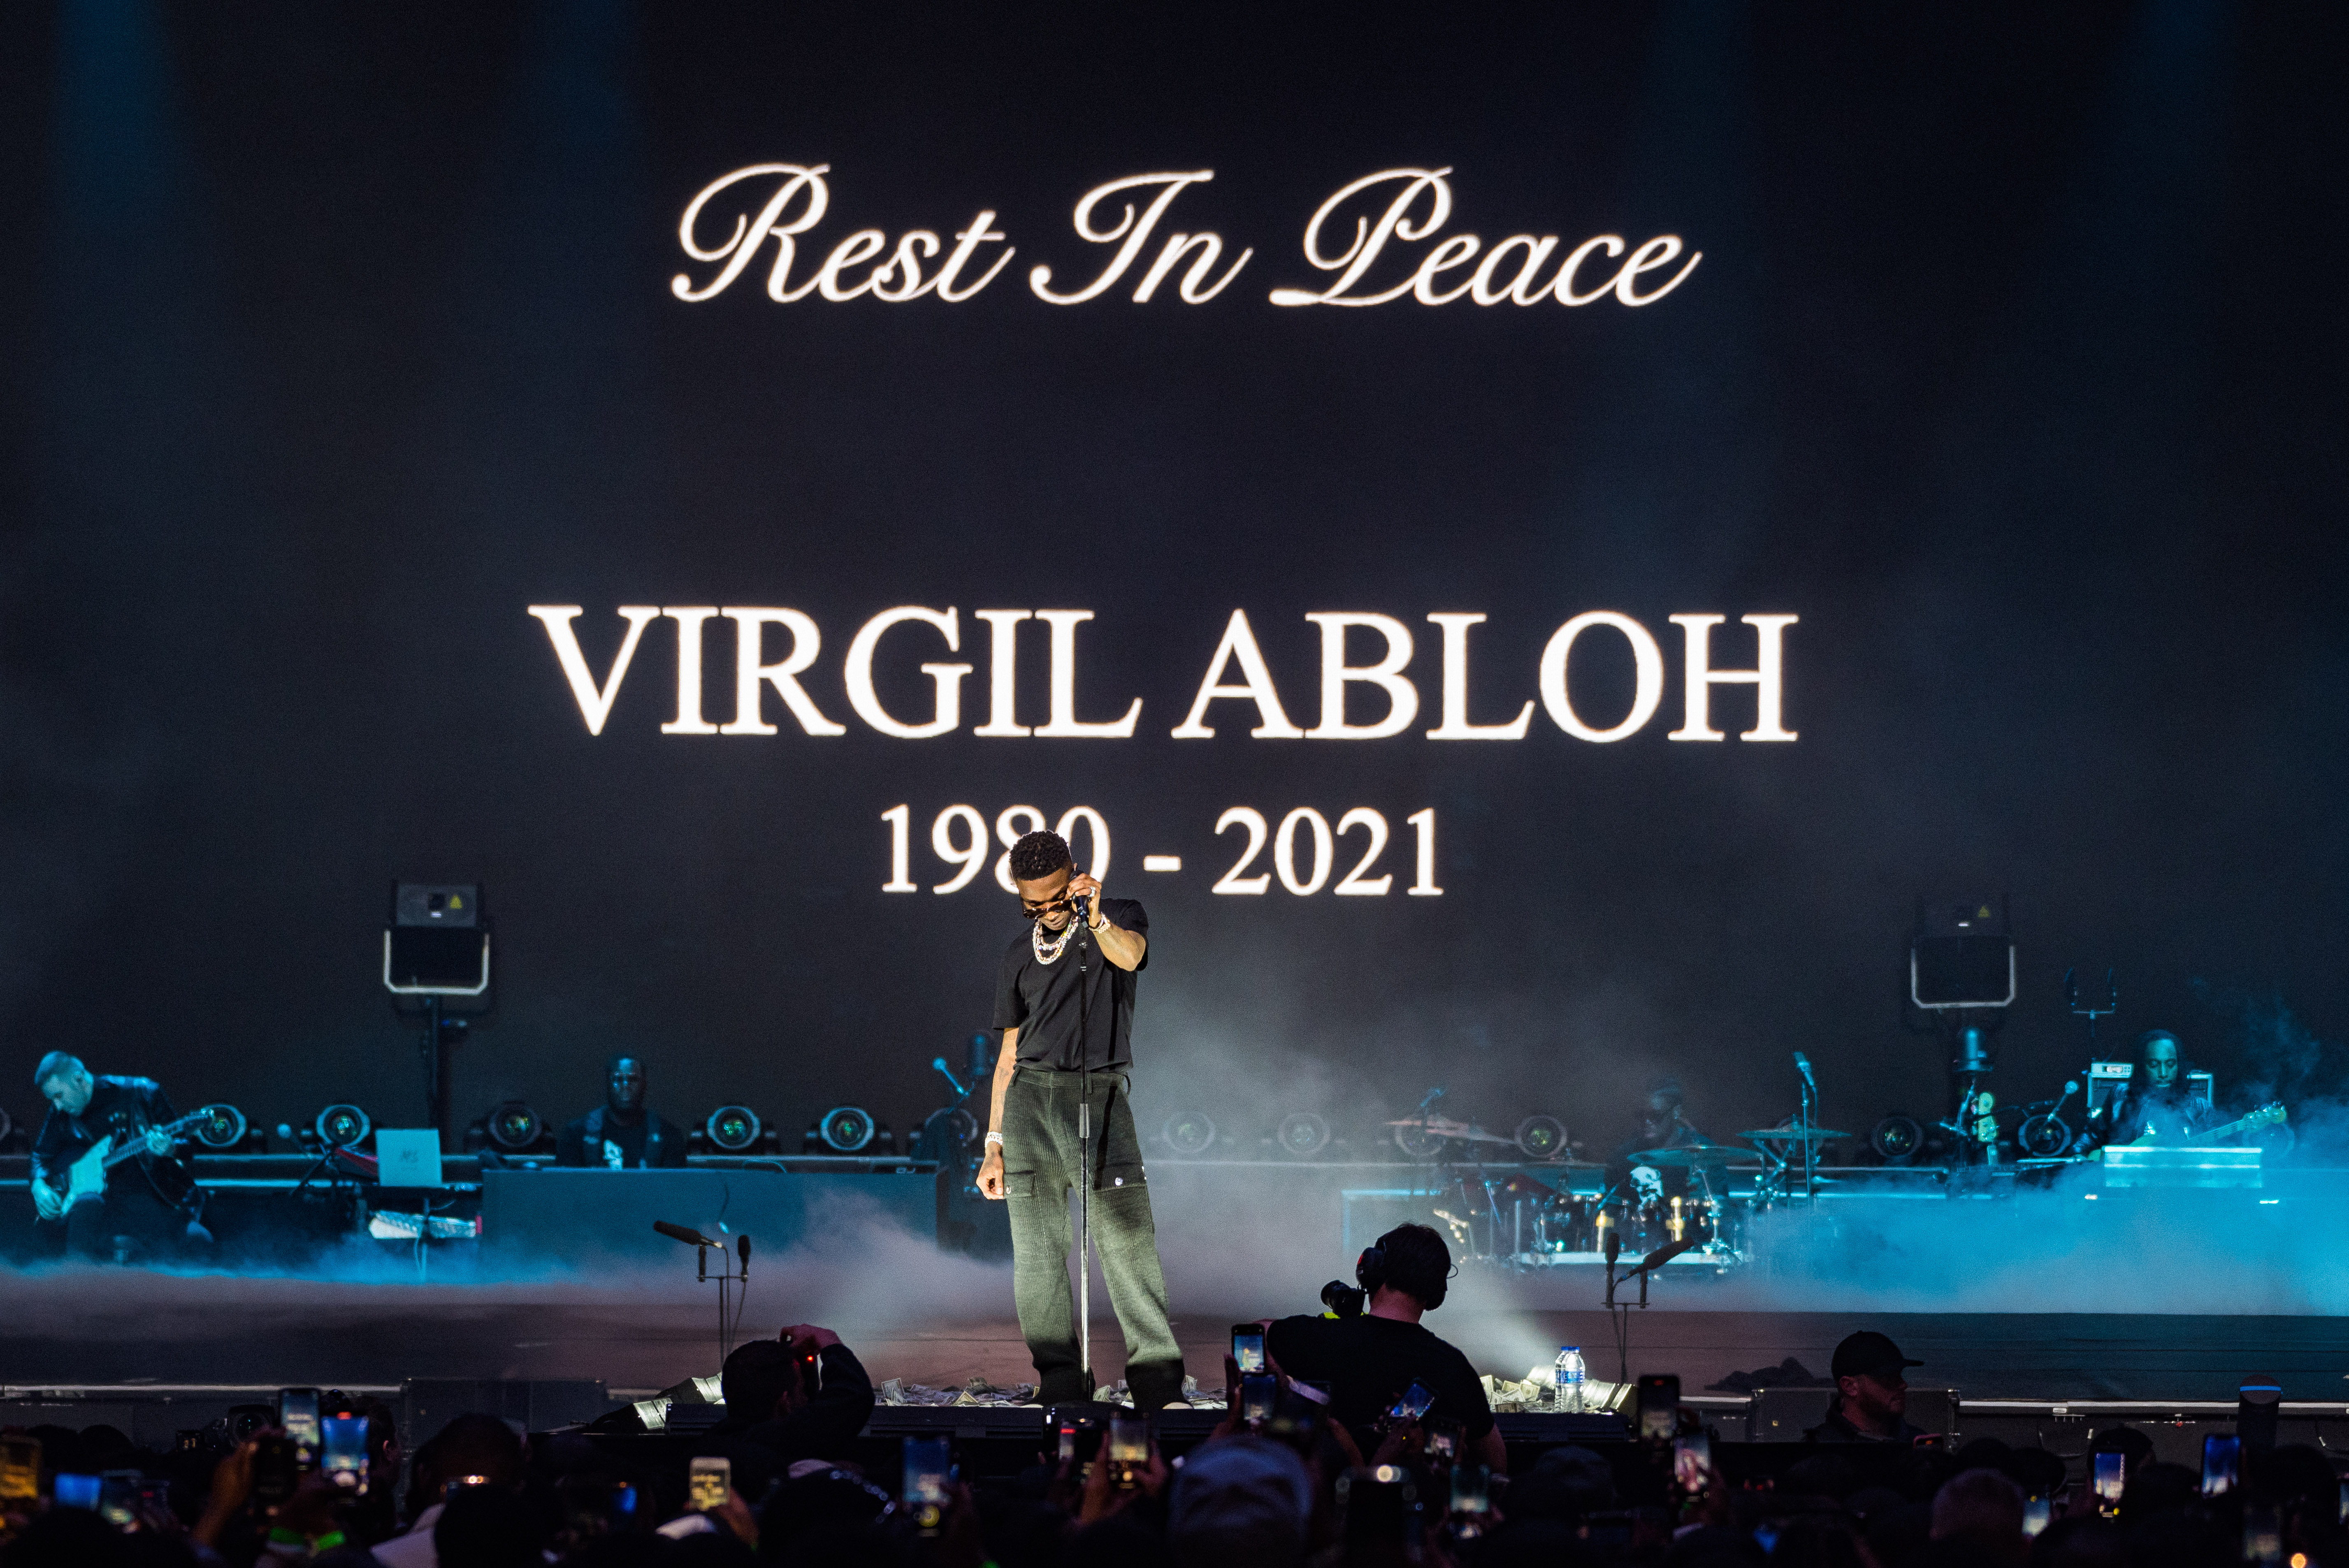 Rest in Peace Virgil Abloh